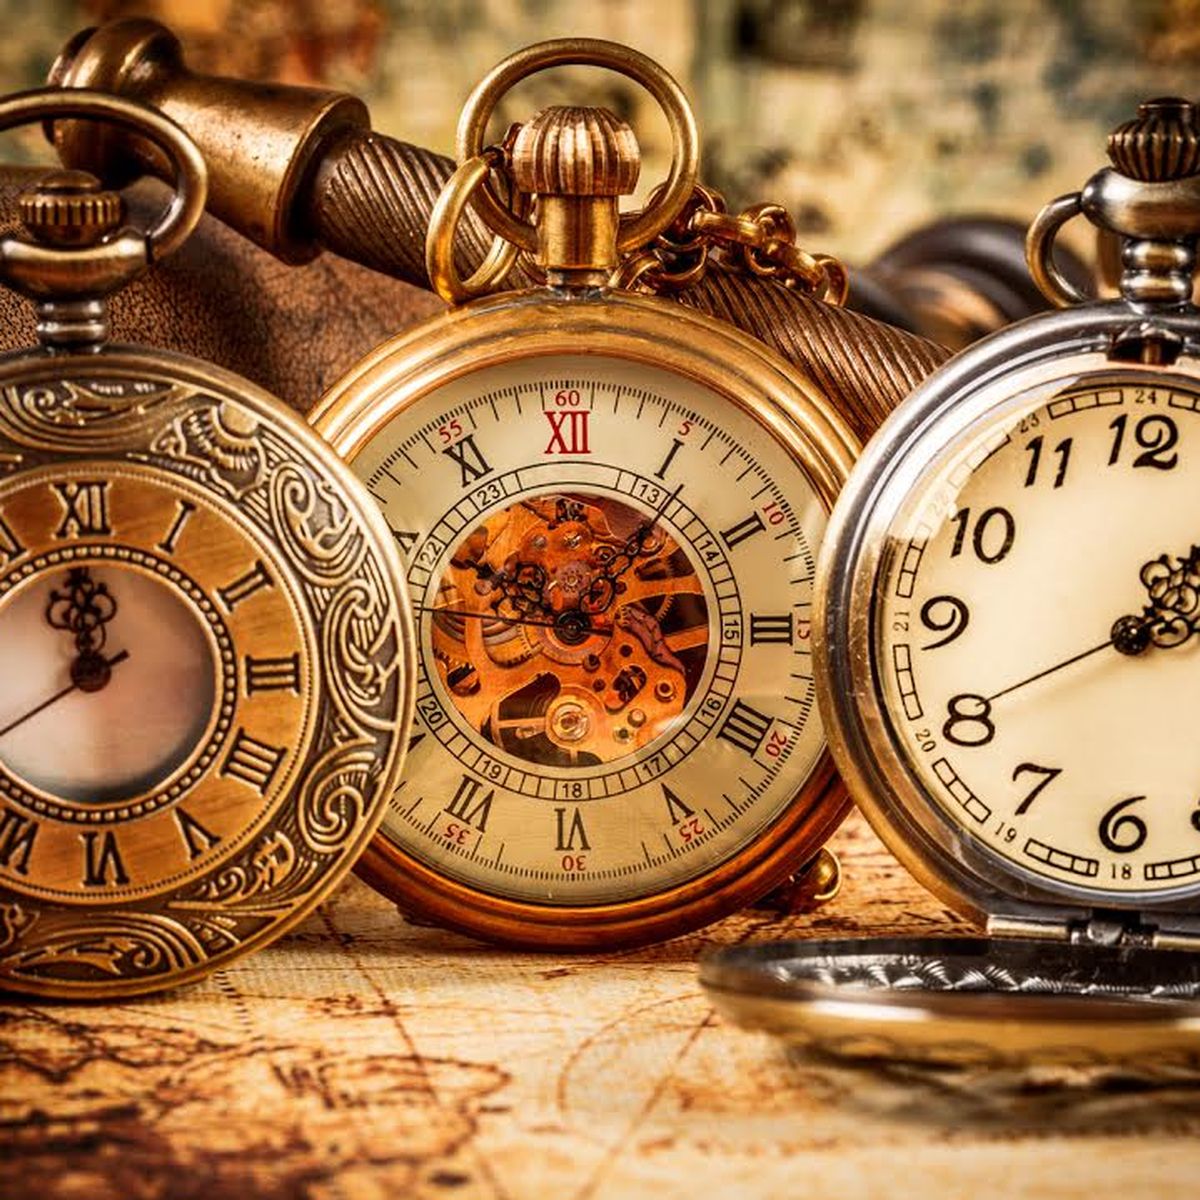 Panerai watch repair services and complete overhaul clocks repair